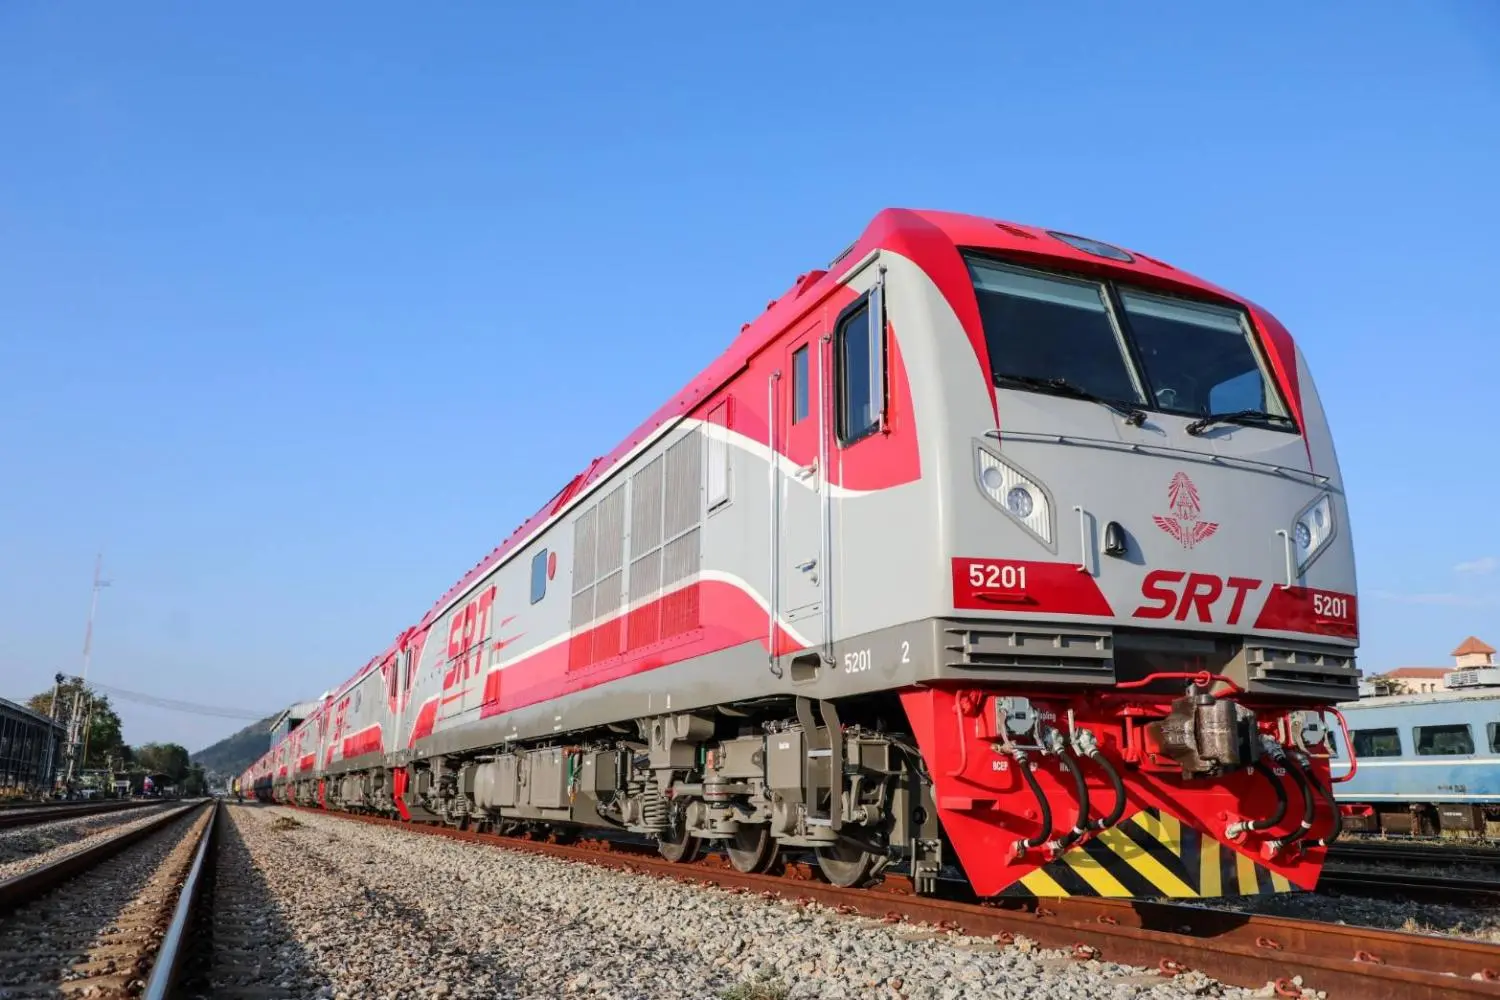 Thailand's Eco-Friendly Train "The Ultraman" Starts Service